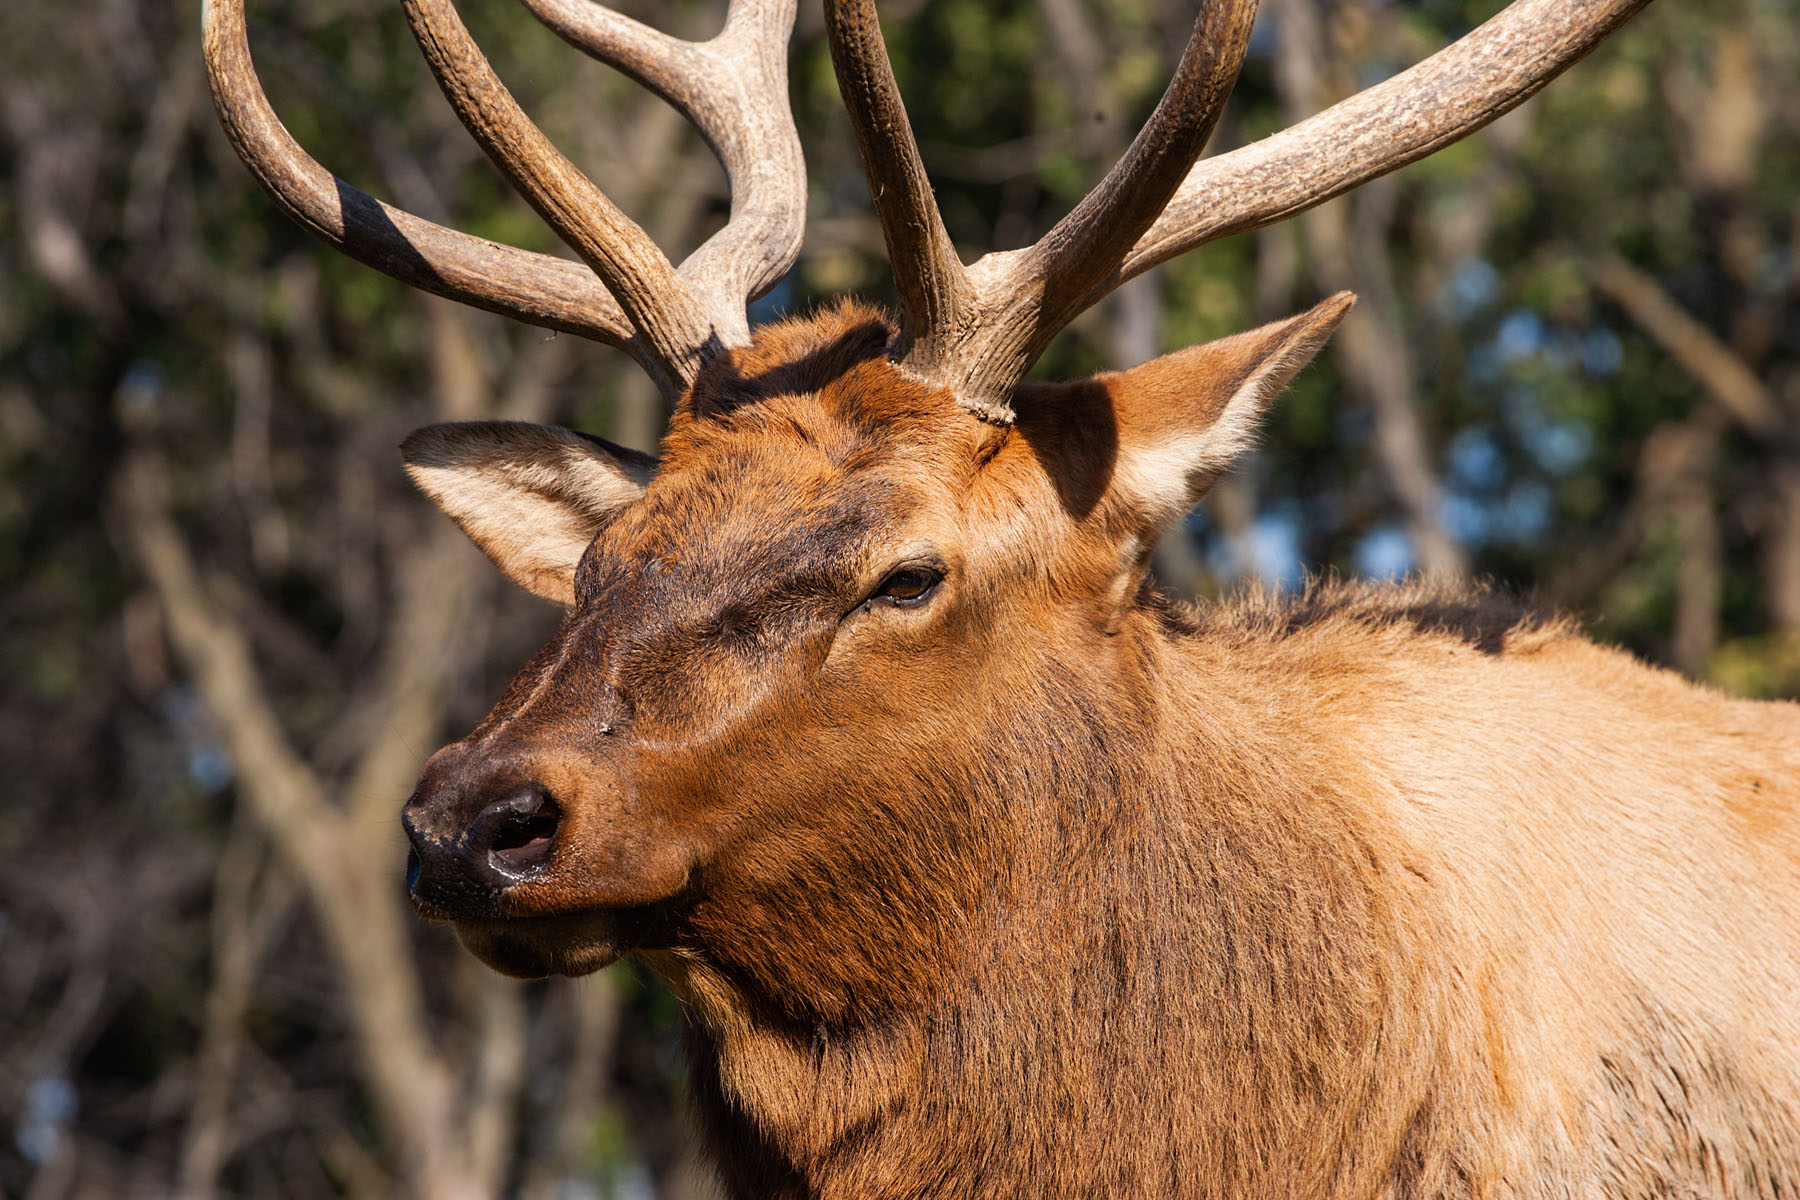 Elk sparring, Simmons Wildlife Safari, Nebraska.  Click for next photo.